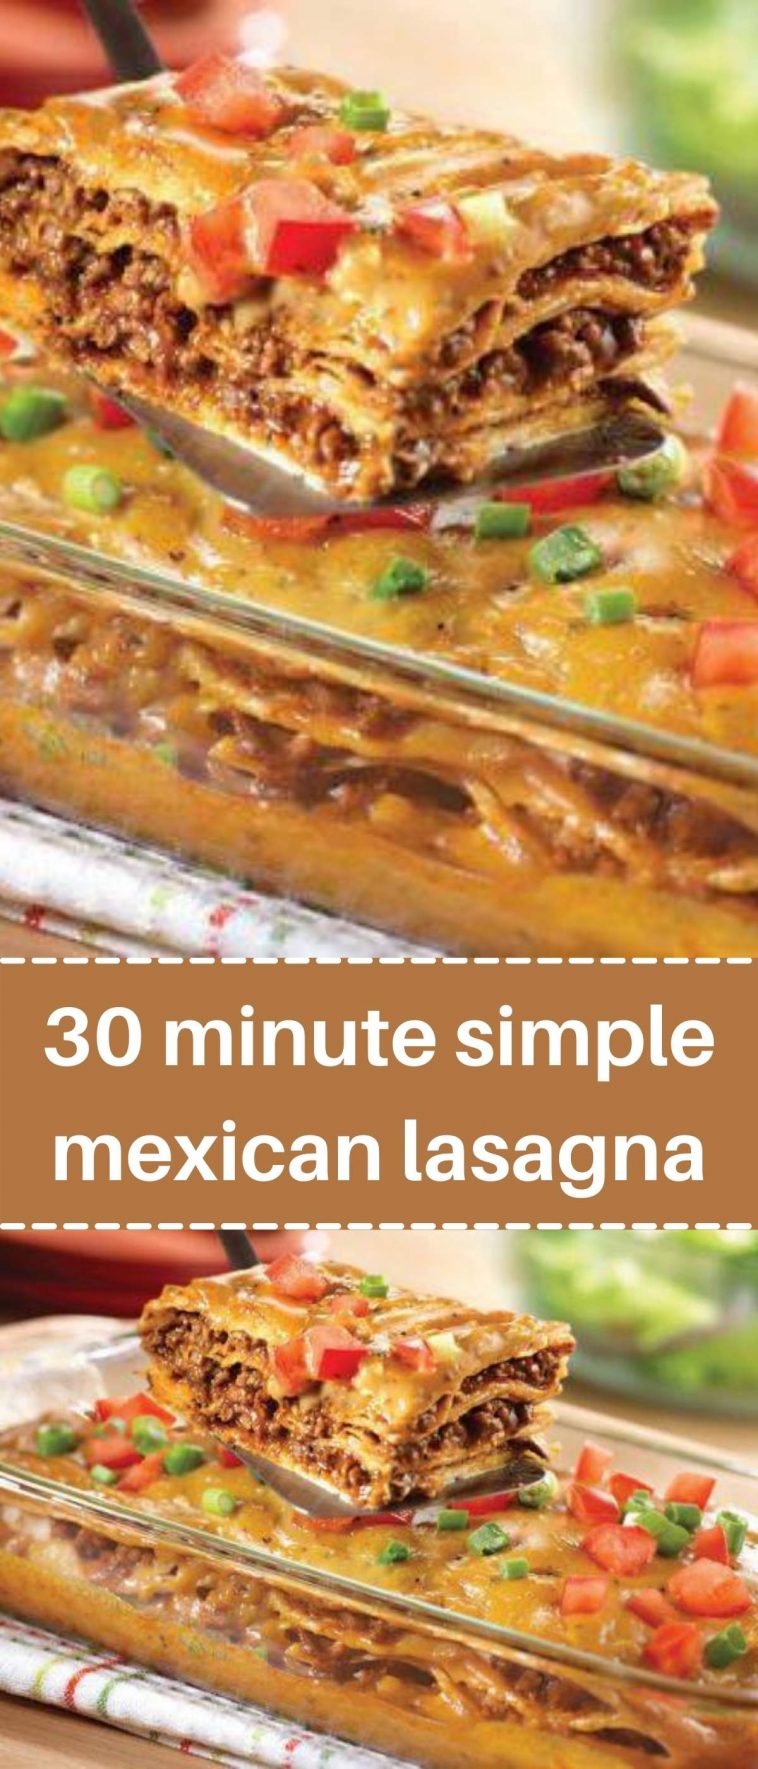 30 minute simple mexican lasagna recipe